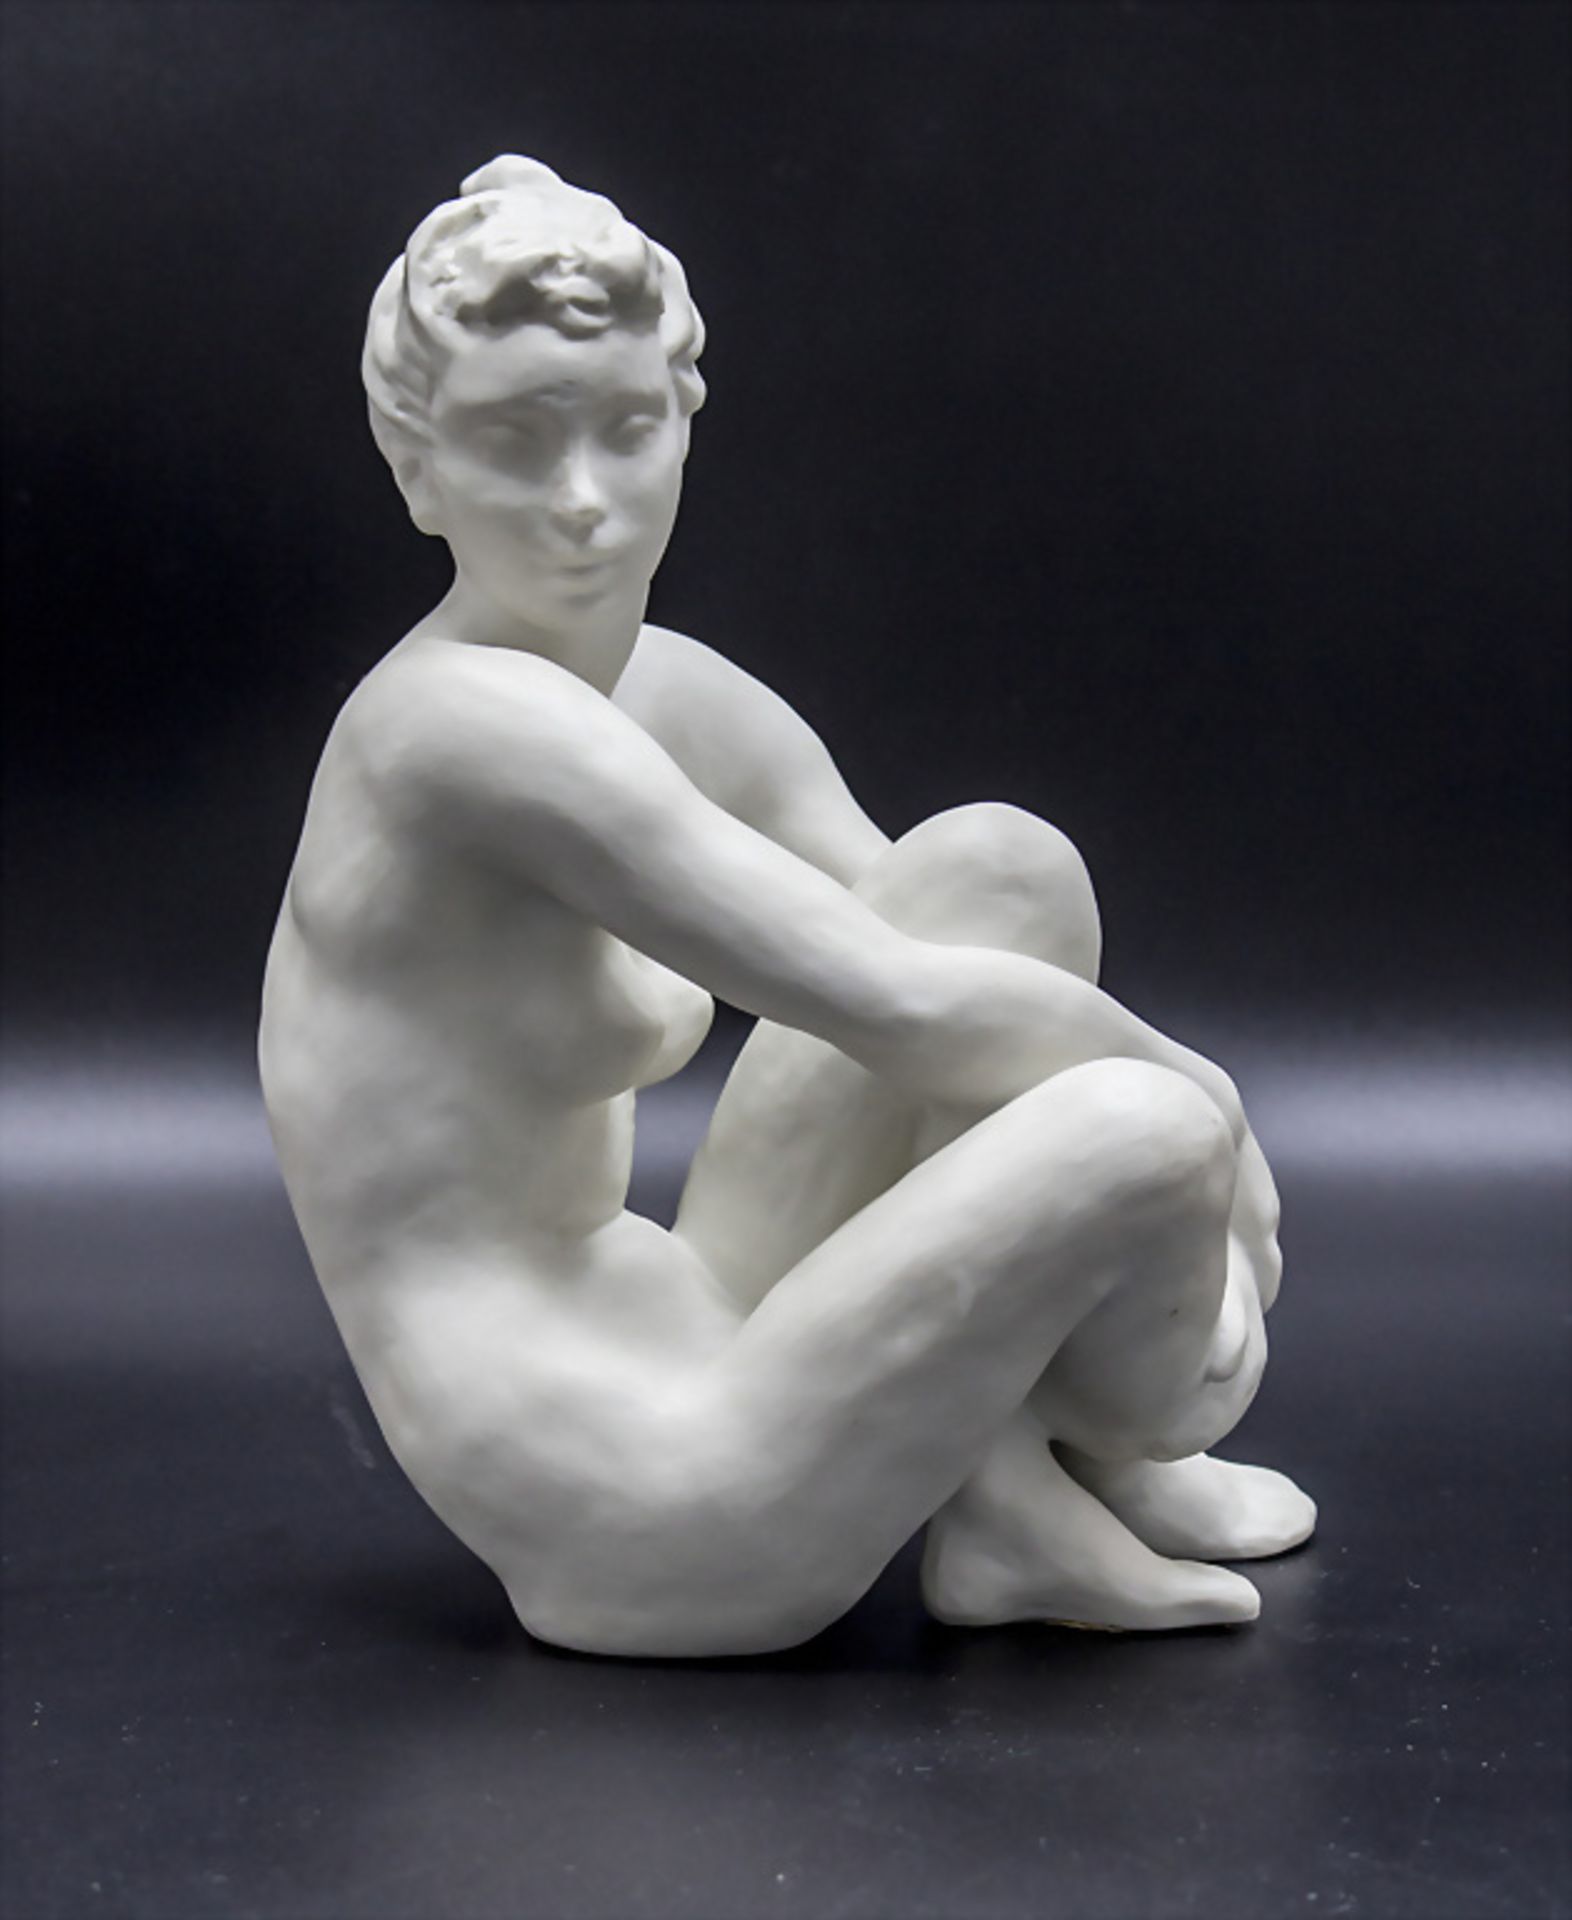 Porzellan Akt 'Die Sitzende' / A porcelain sculpture of a sitting nude, Lore Friedrich-Gronau, ...